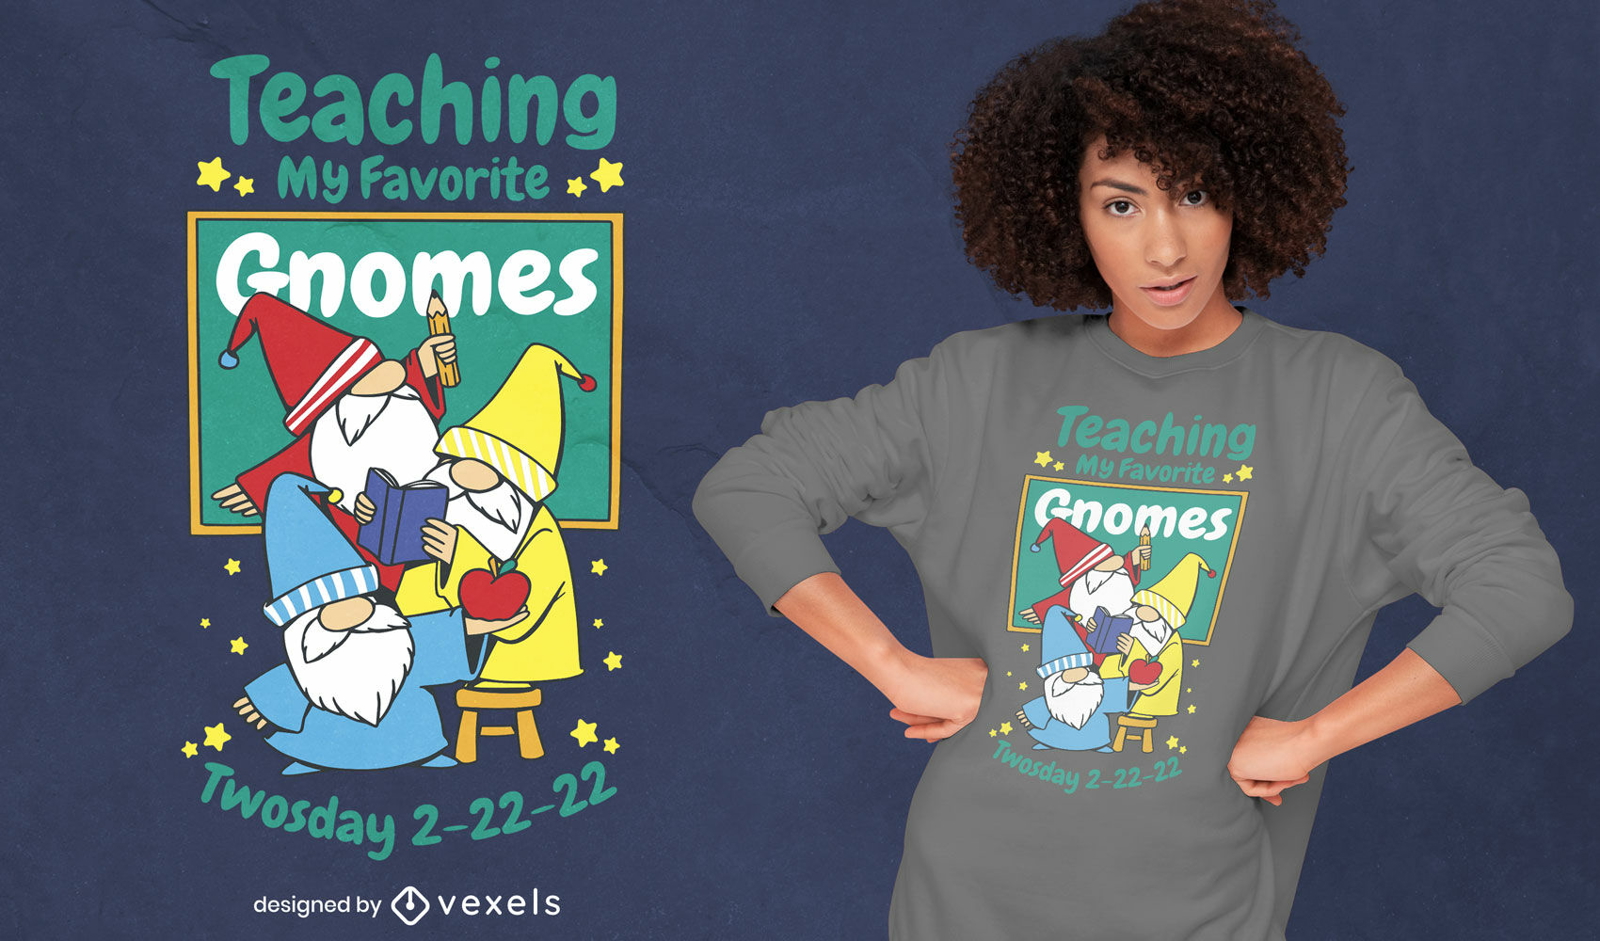 Twosday gnomes teaching t-shirt design